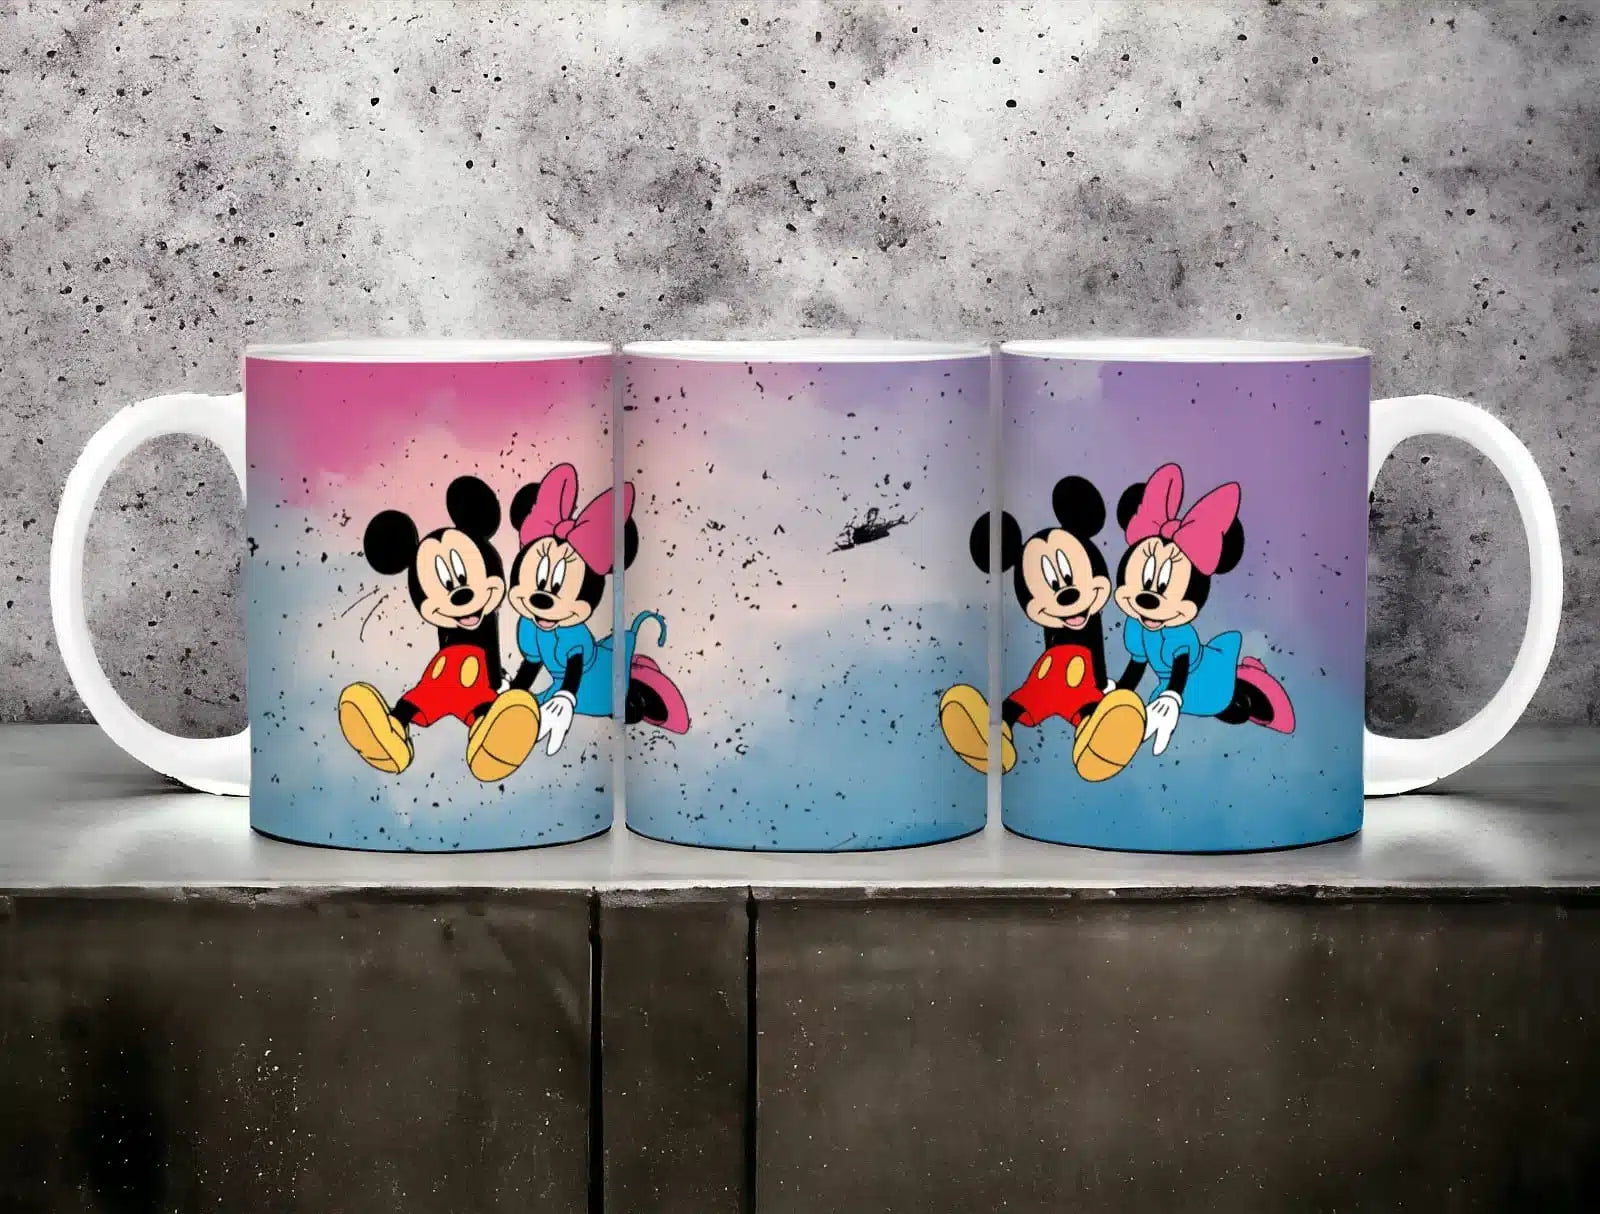 Cana personalizata, Mickey si Minnie Model 10, Ceramica, Alb, 350 ml